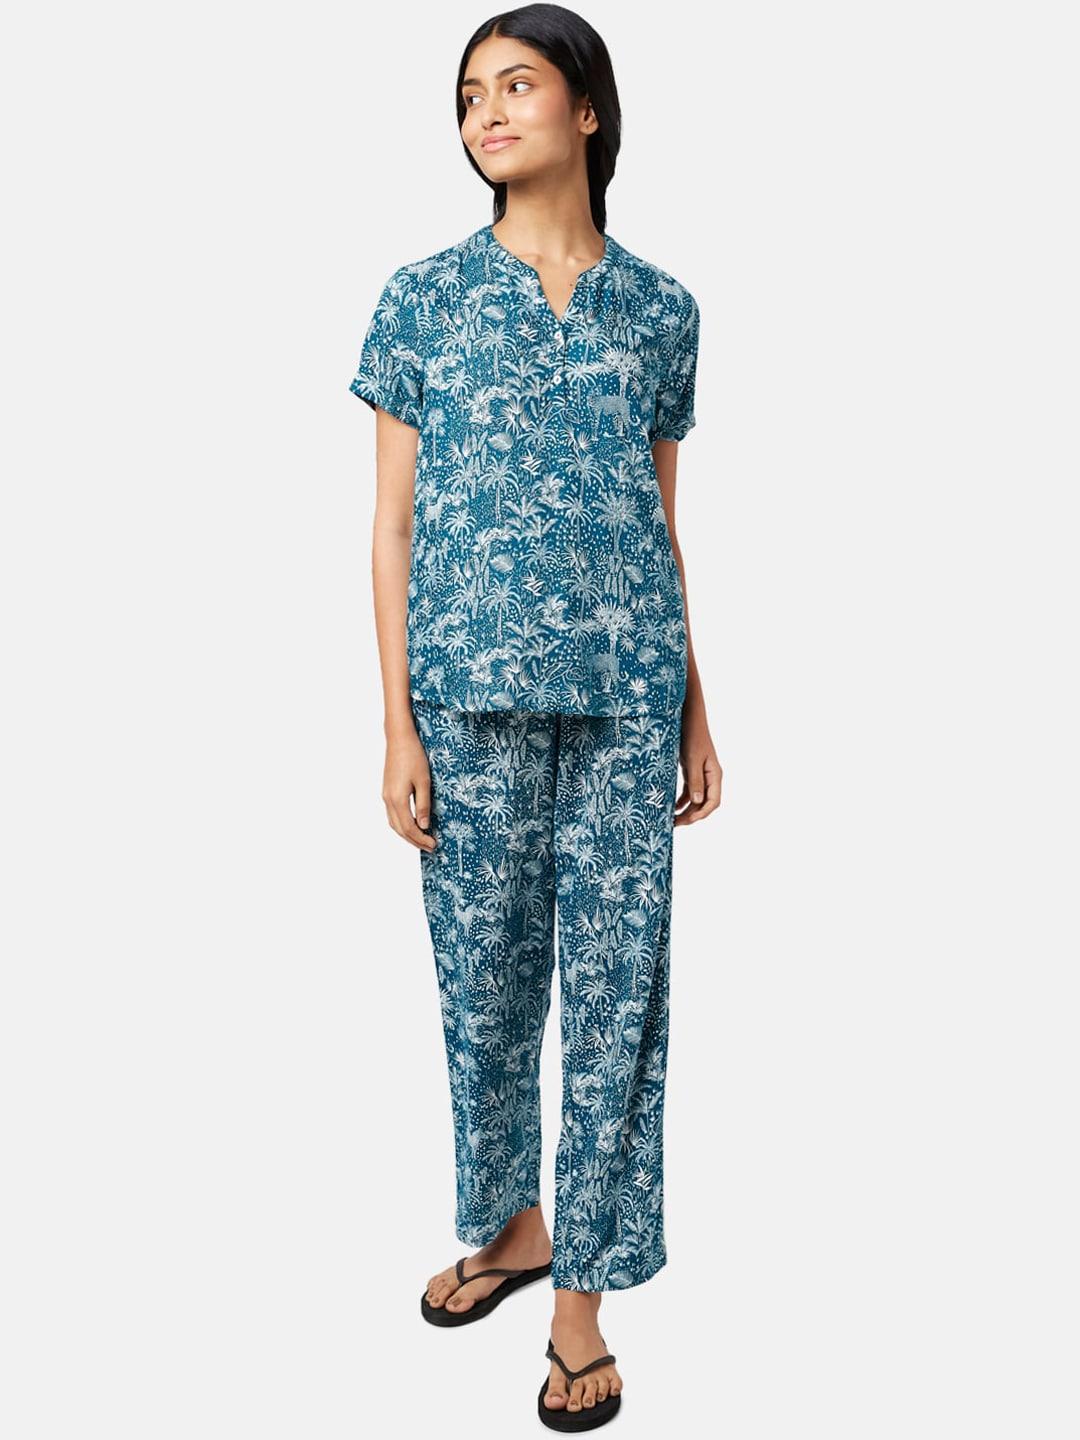 Dreamz by Pantaloons Women Printed Night suit